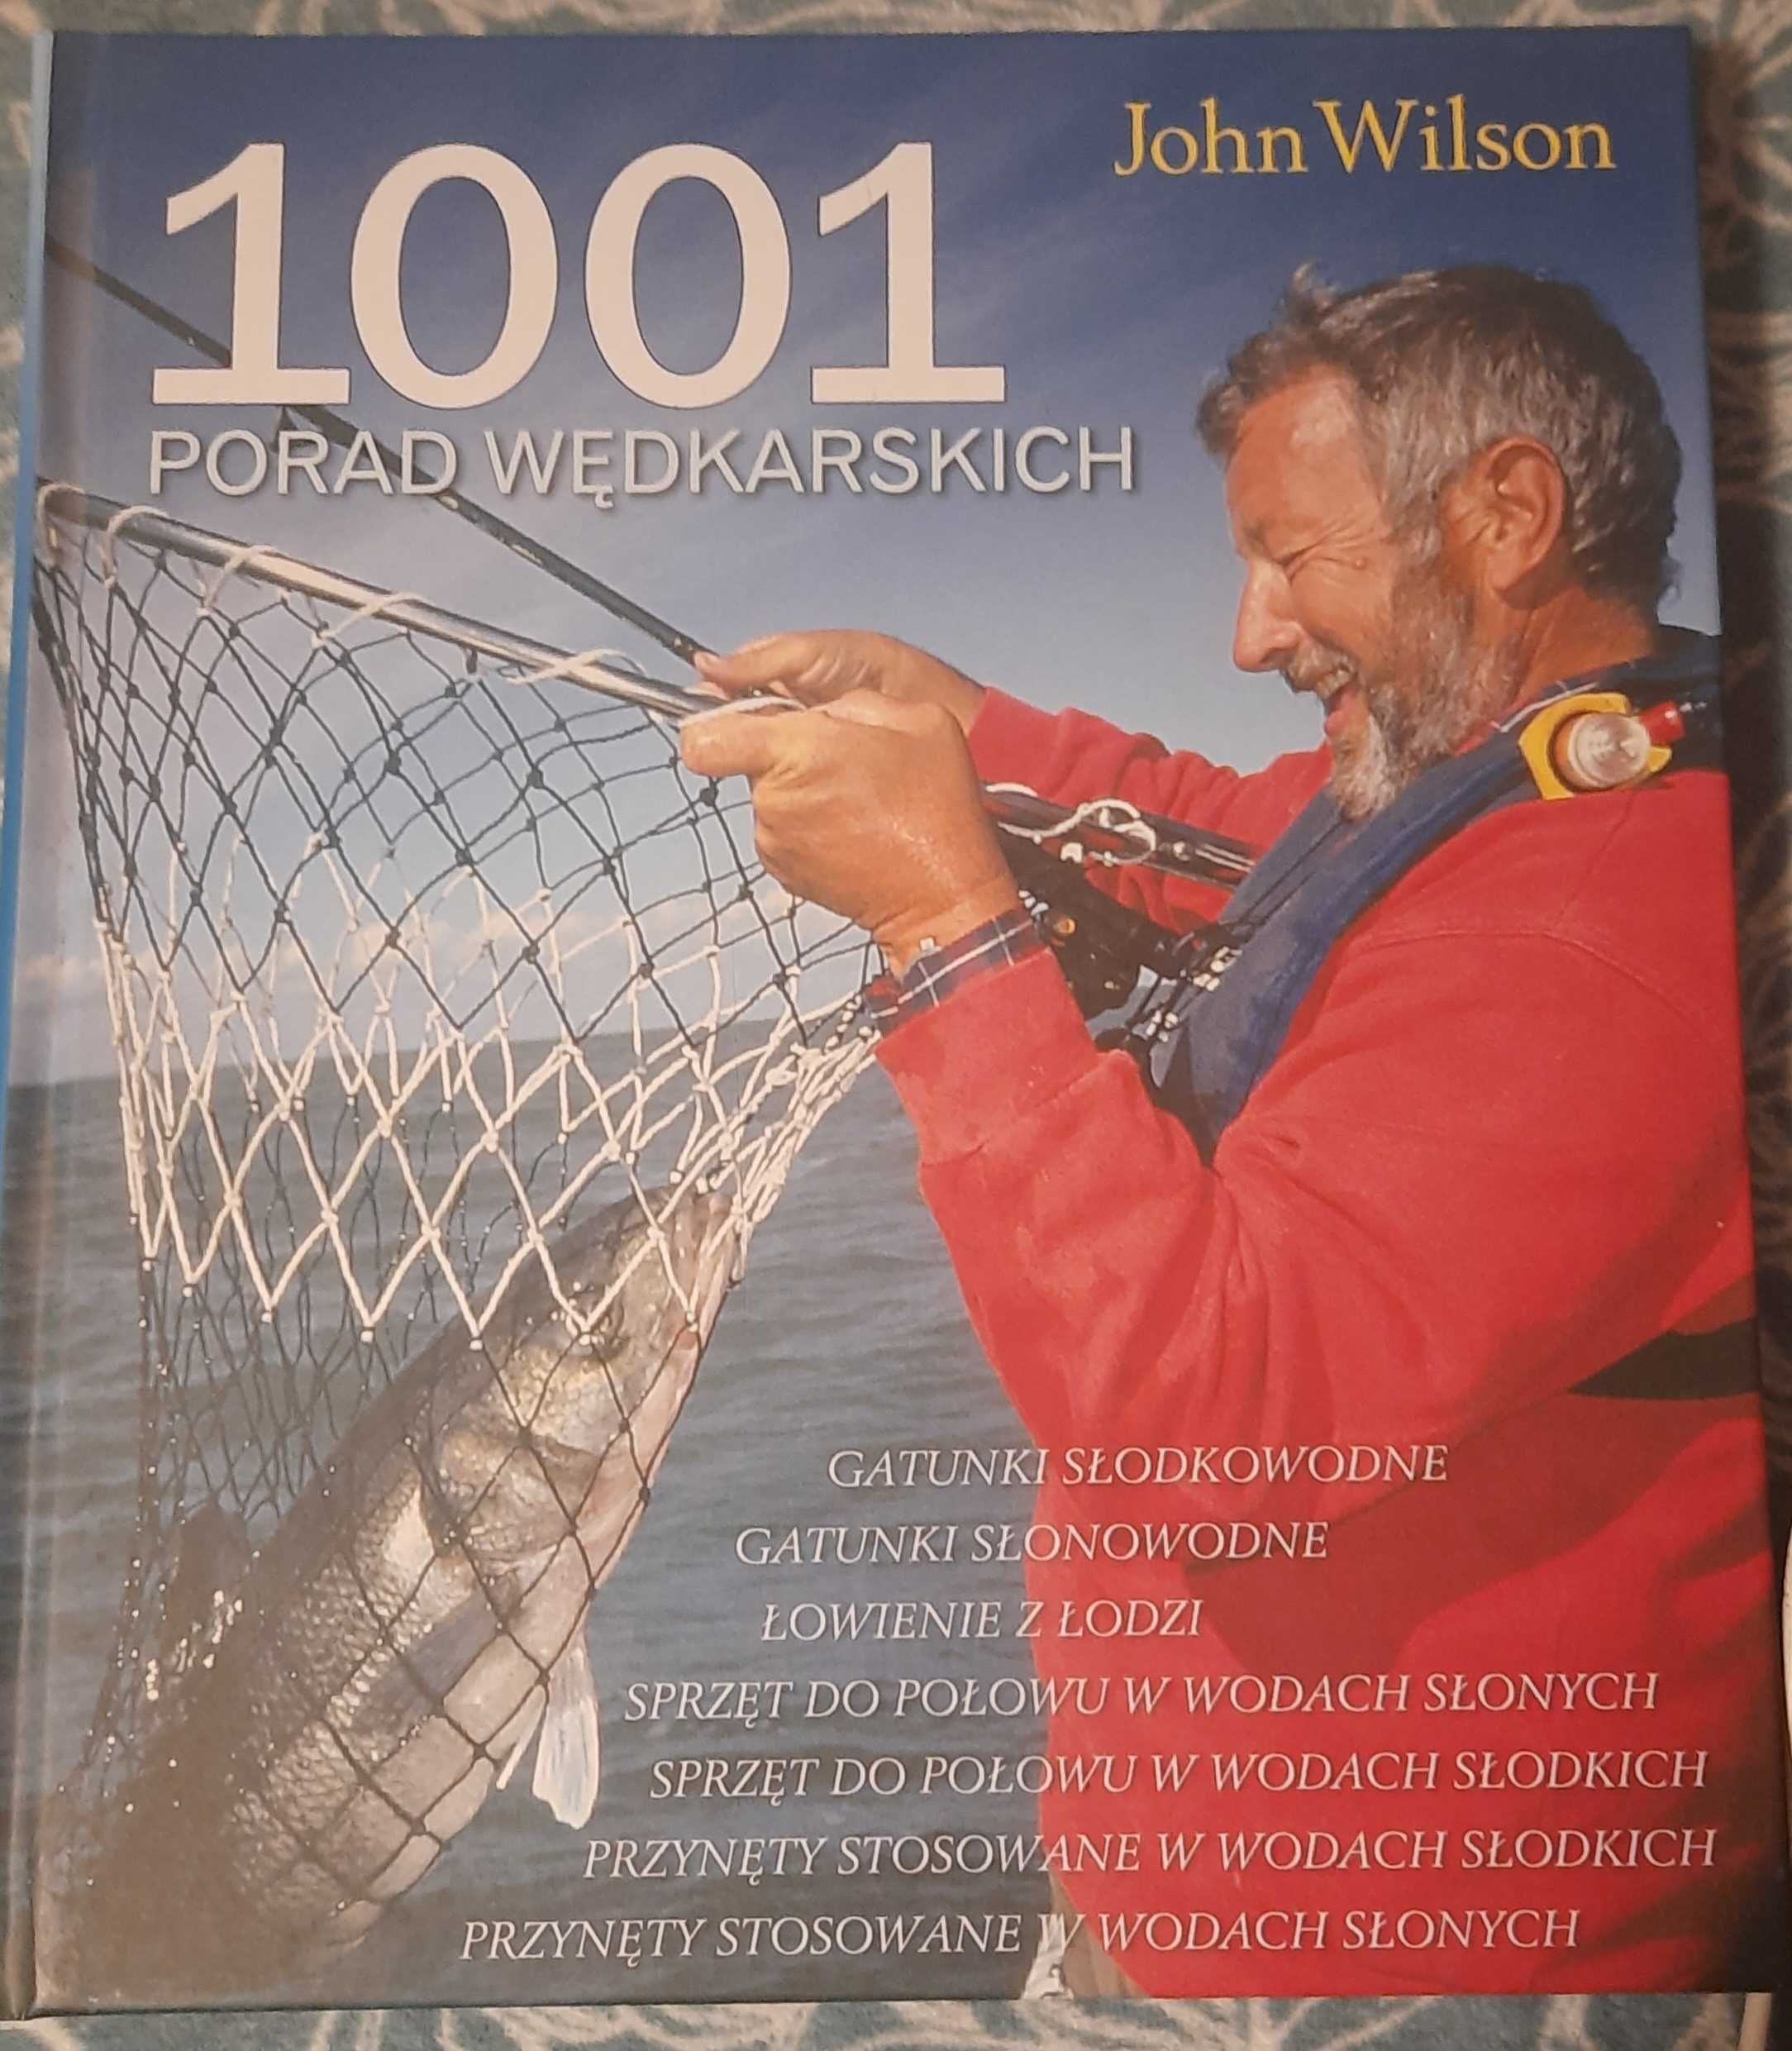 1001 porad wędkarskich. John Wilson